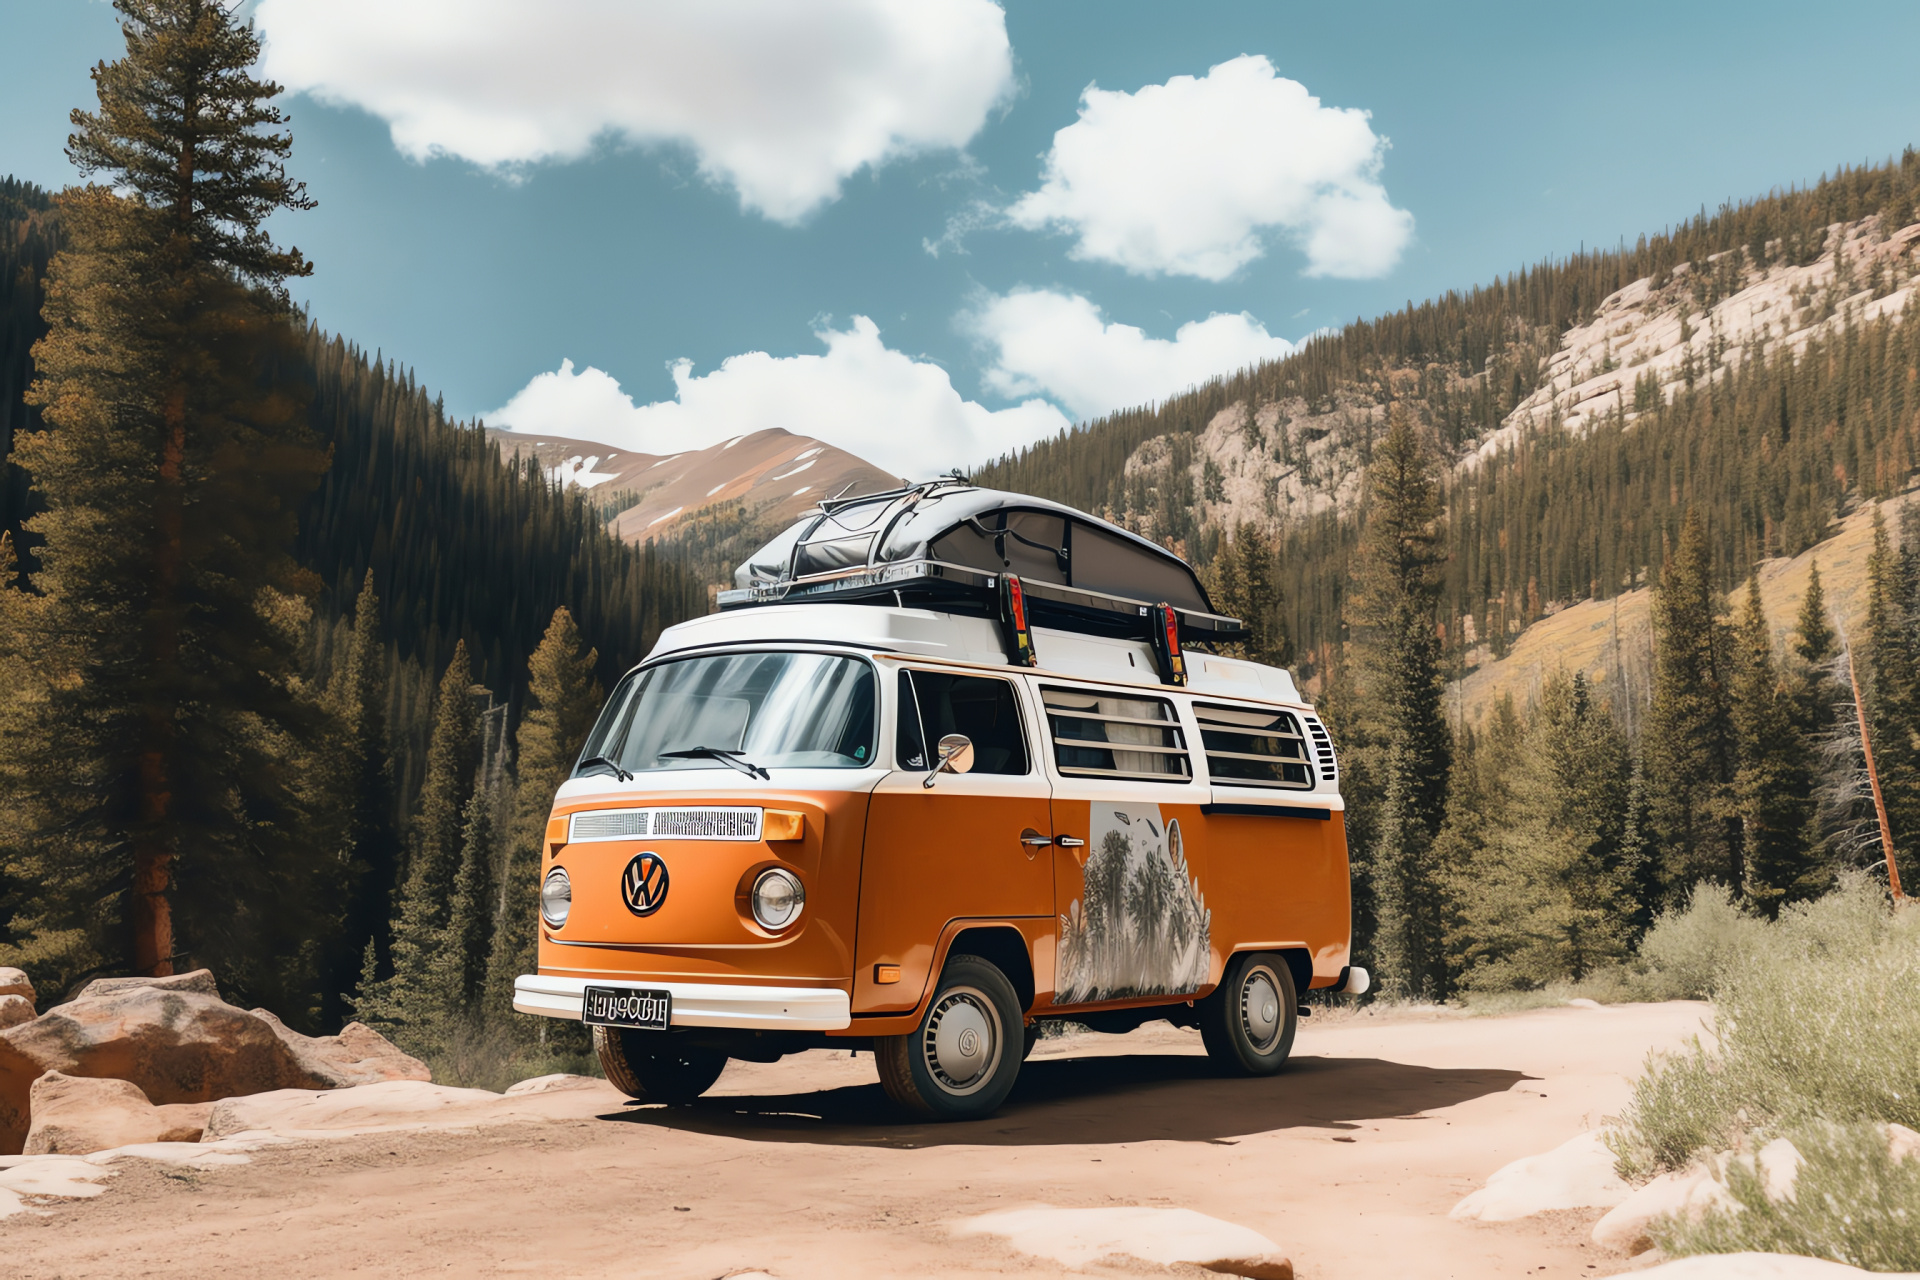 VW Bus adventure, Colorado wilderness, all-terrain capability, roof storage, alpine landscape, HD Desktop Wallpaper